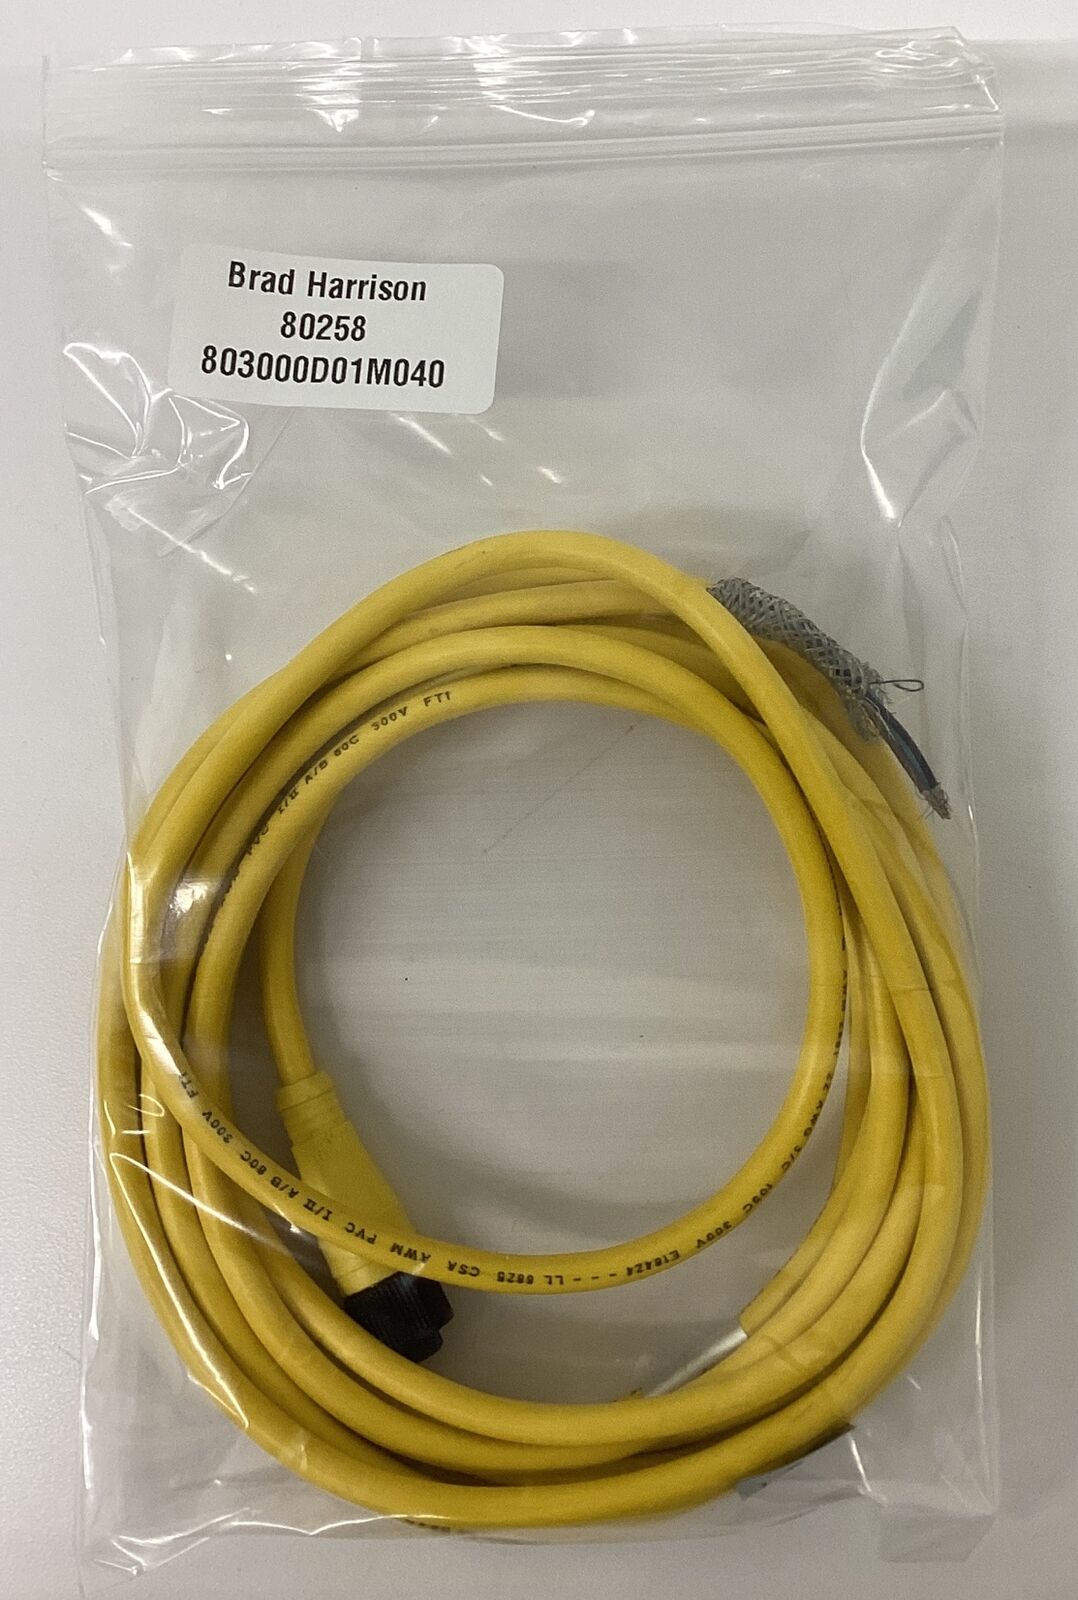 Brad Harrison 80258 803000D01M040 3P Female Micro Change Cable 4 meters (GR202)